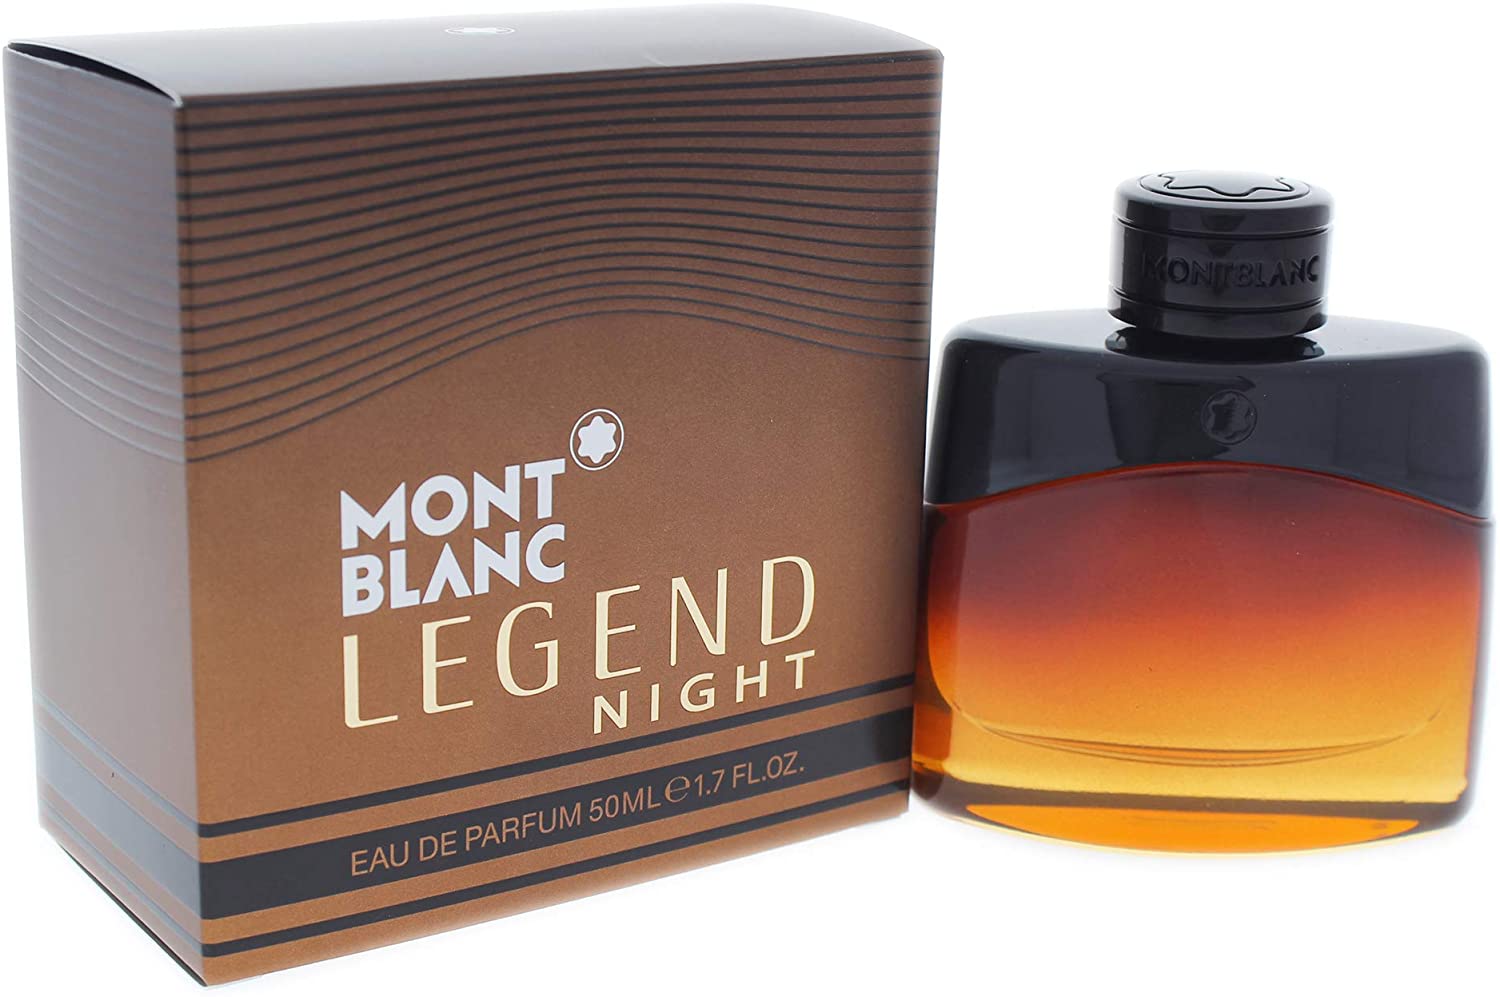 Парфюм легенда. Montblanc Legend EDP (M) 50ml. Духи Montblanc Legend Night. Mont Blanc Legend Night парфюмерная вода мужская 100 мл. Montblanc Legend Night парфюмированная вода 50 мл.